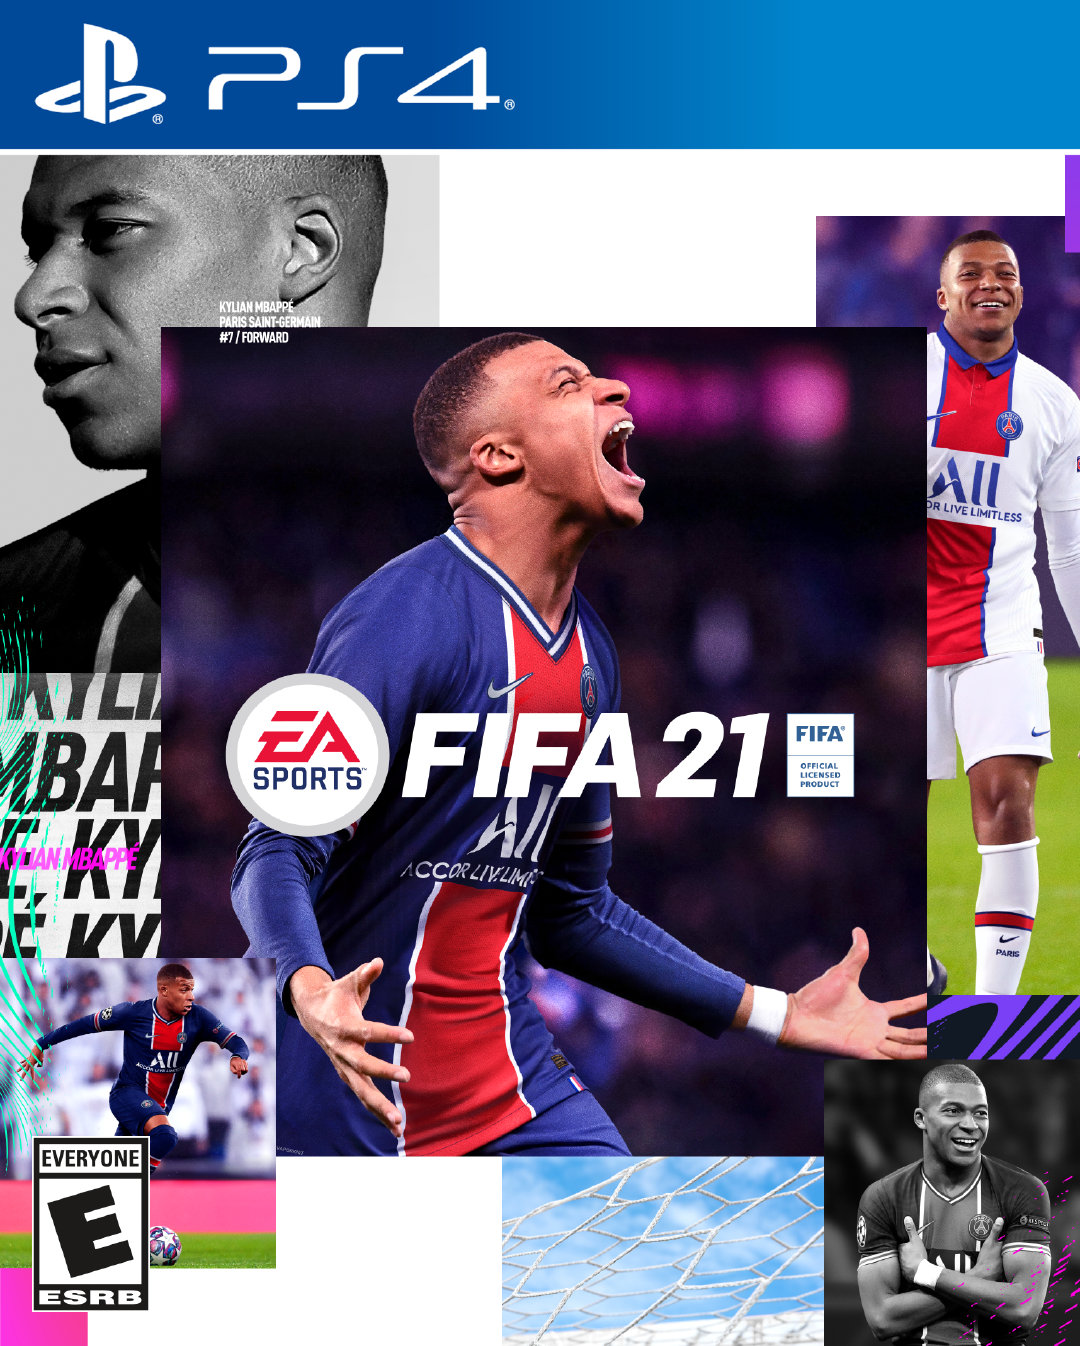 《FIFA 21》10月10日发售 姆巴佩为封面球星